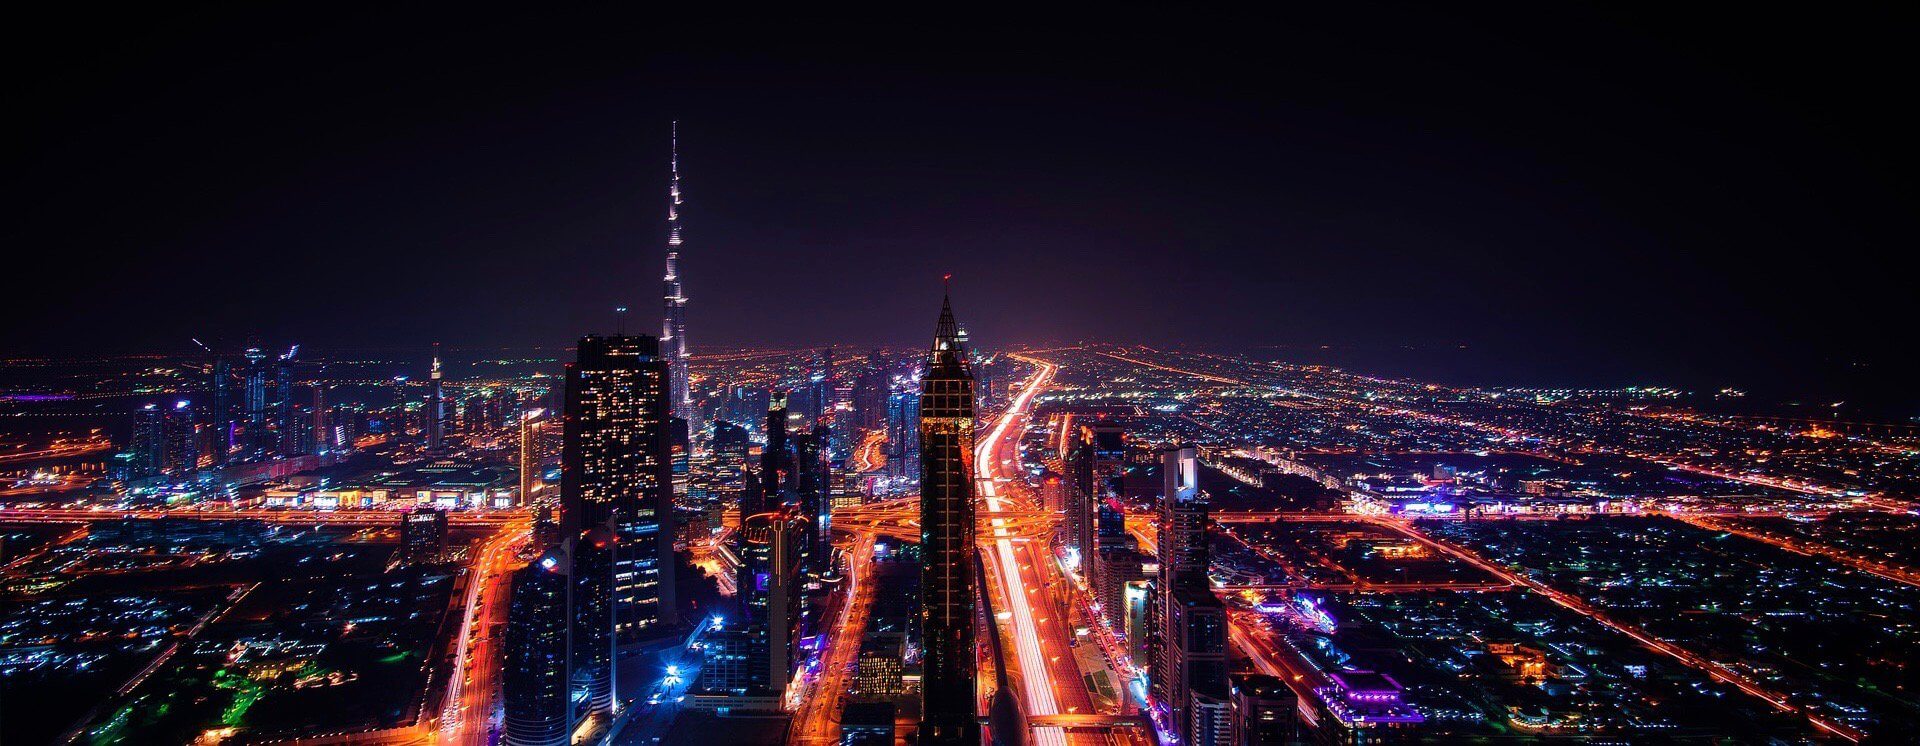 The Dubai skyline at night all light up